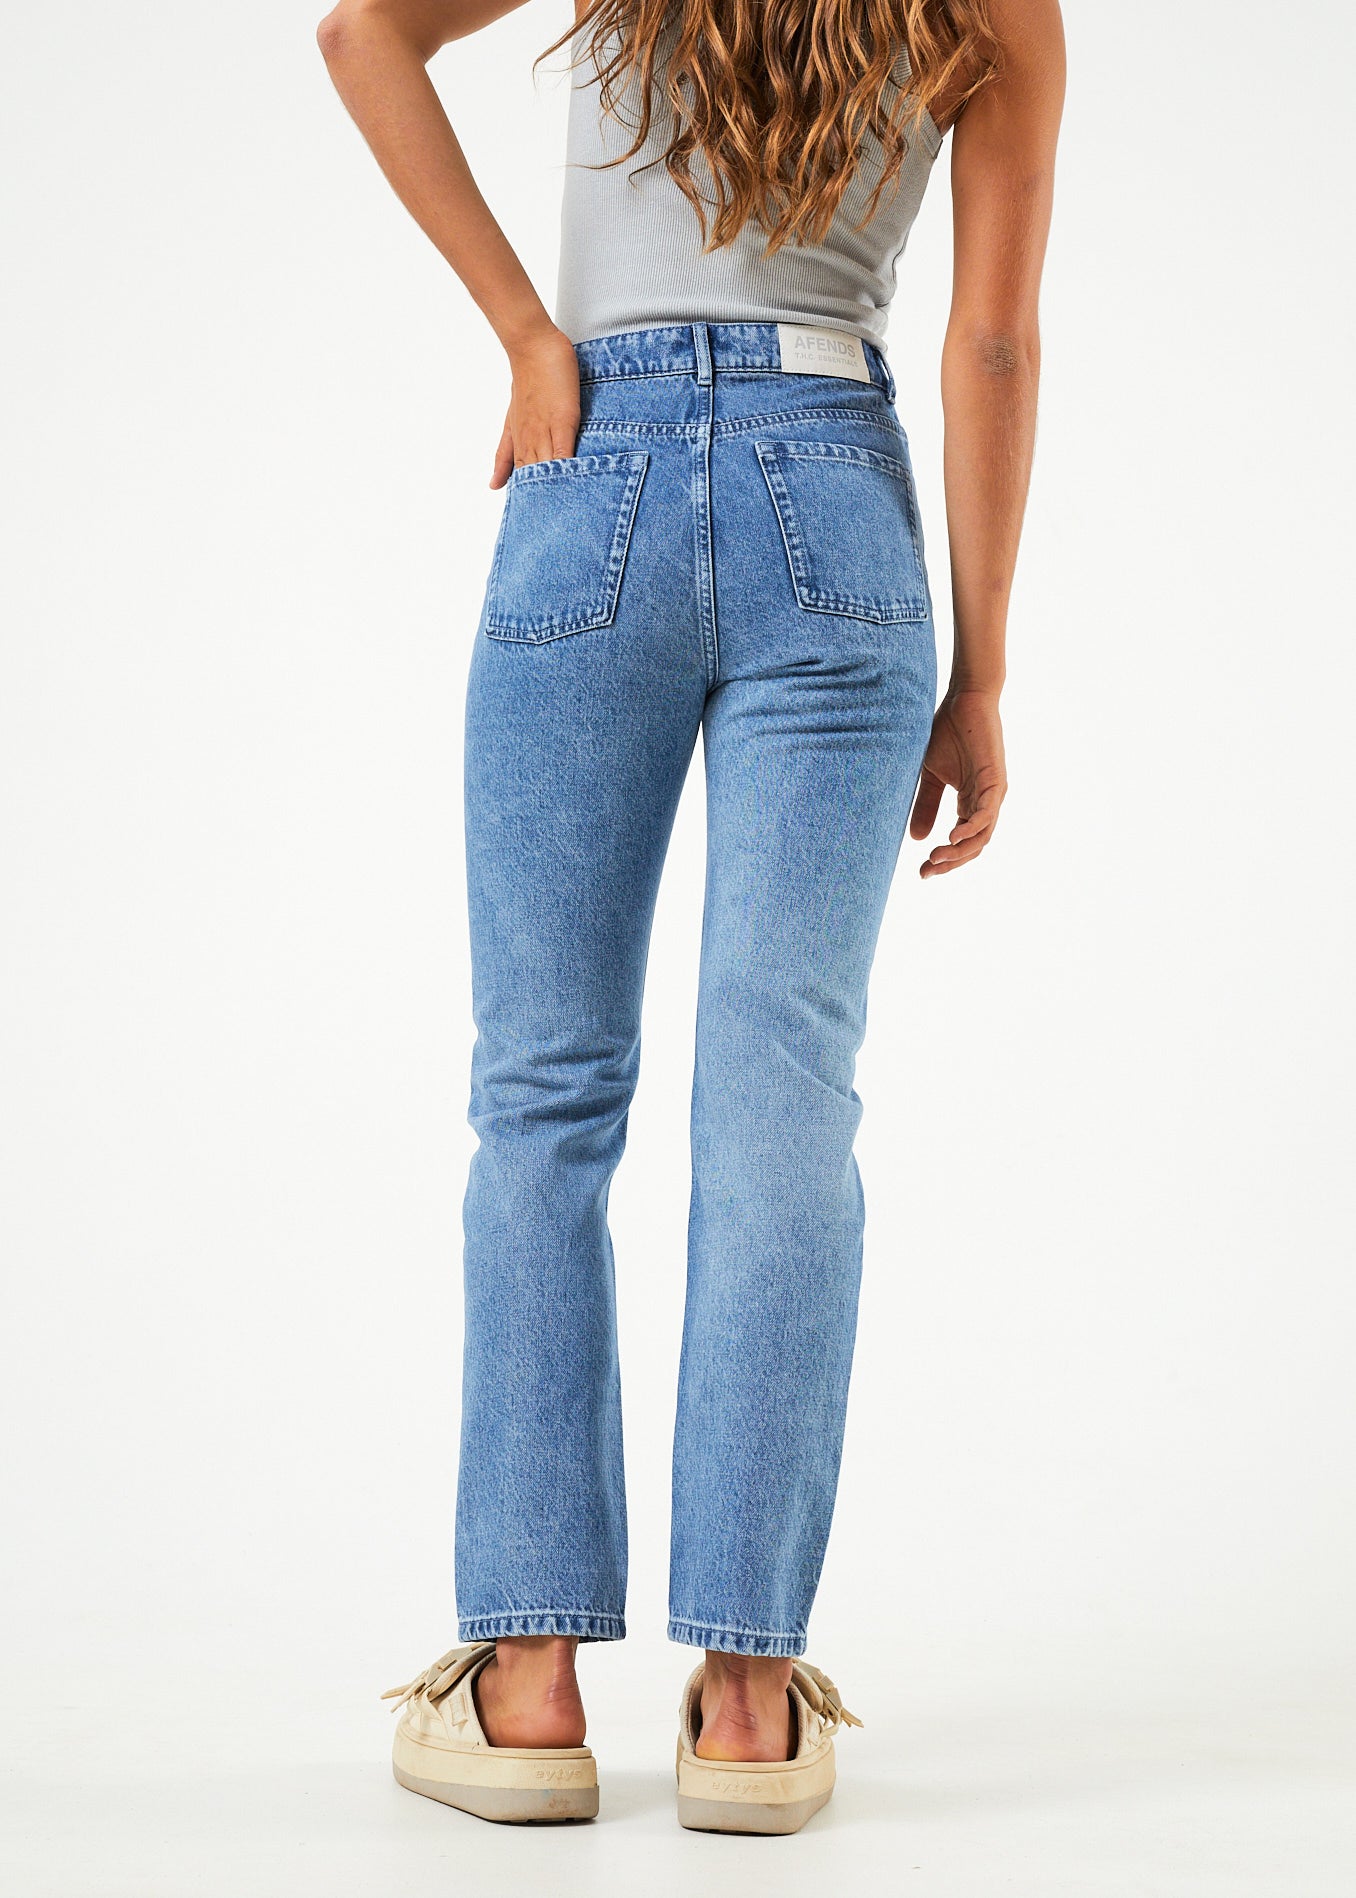 Afends Womens Kylie - Hemp Denim Slim Fit Jeans - Worn Blue 